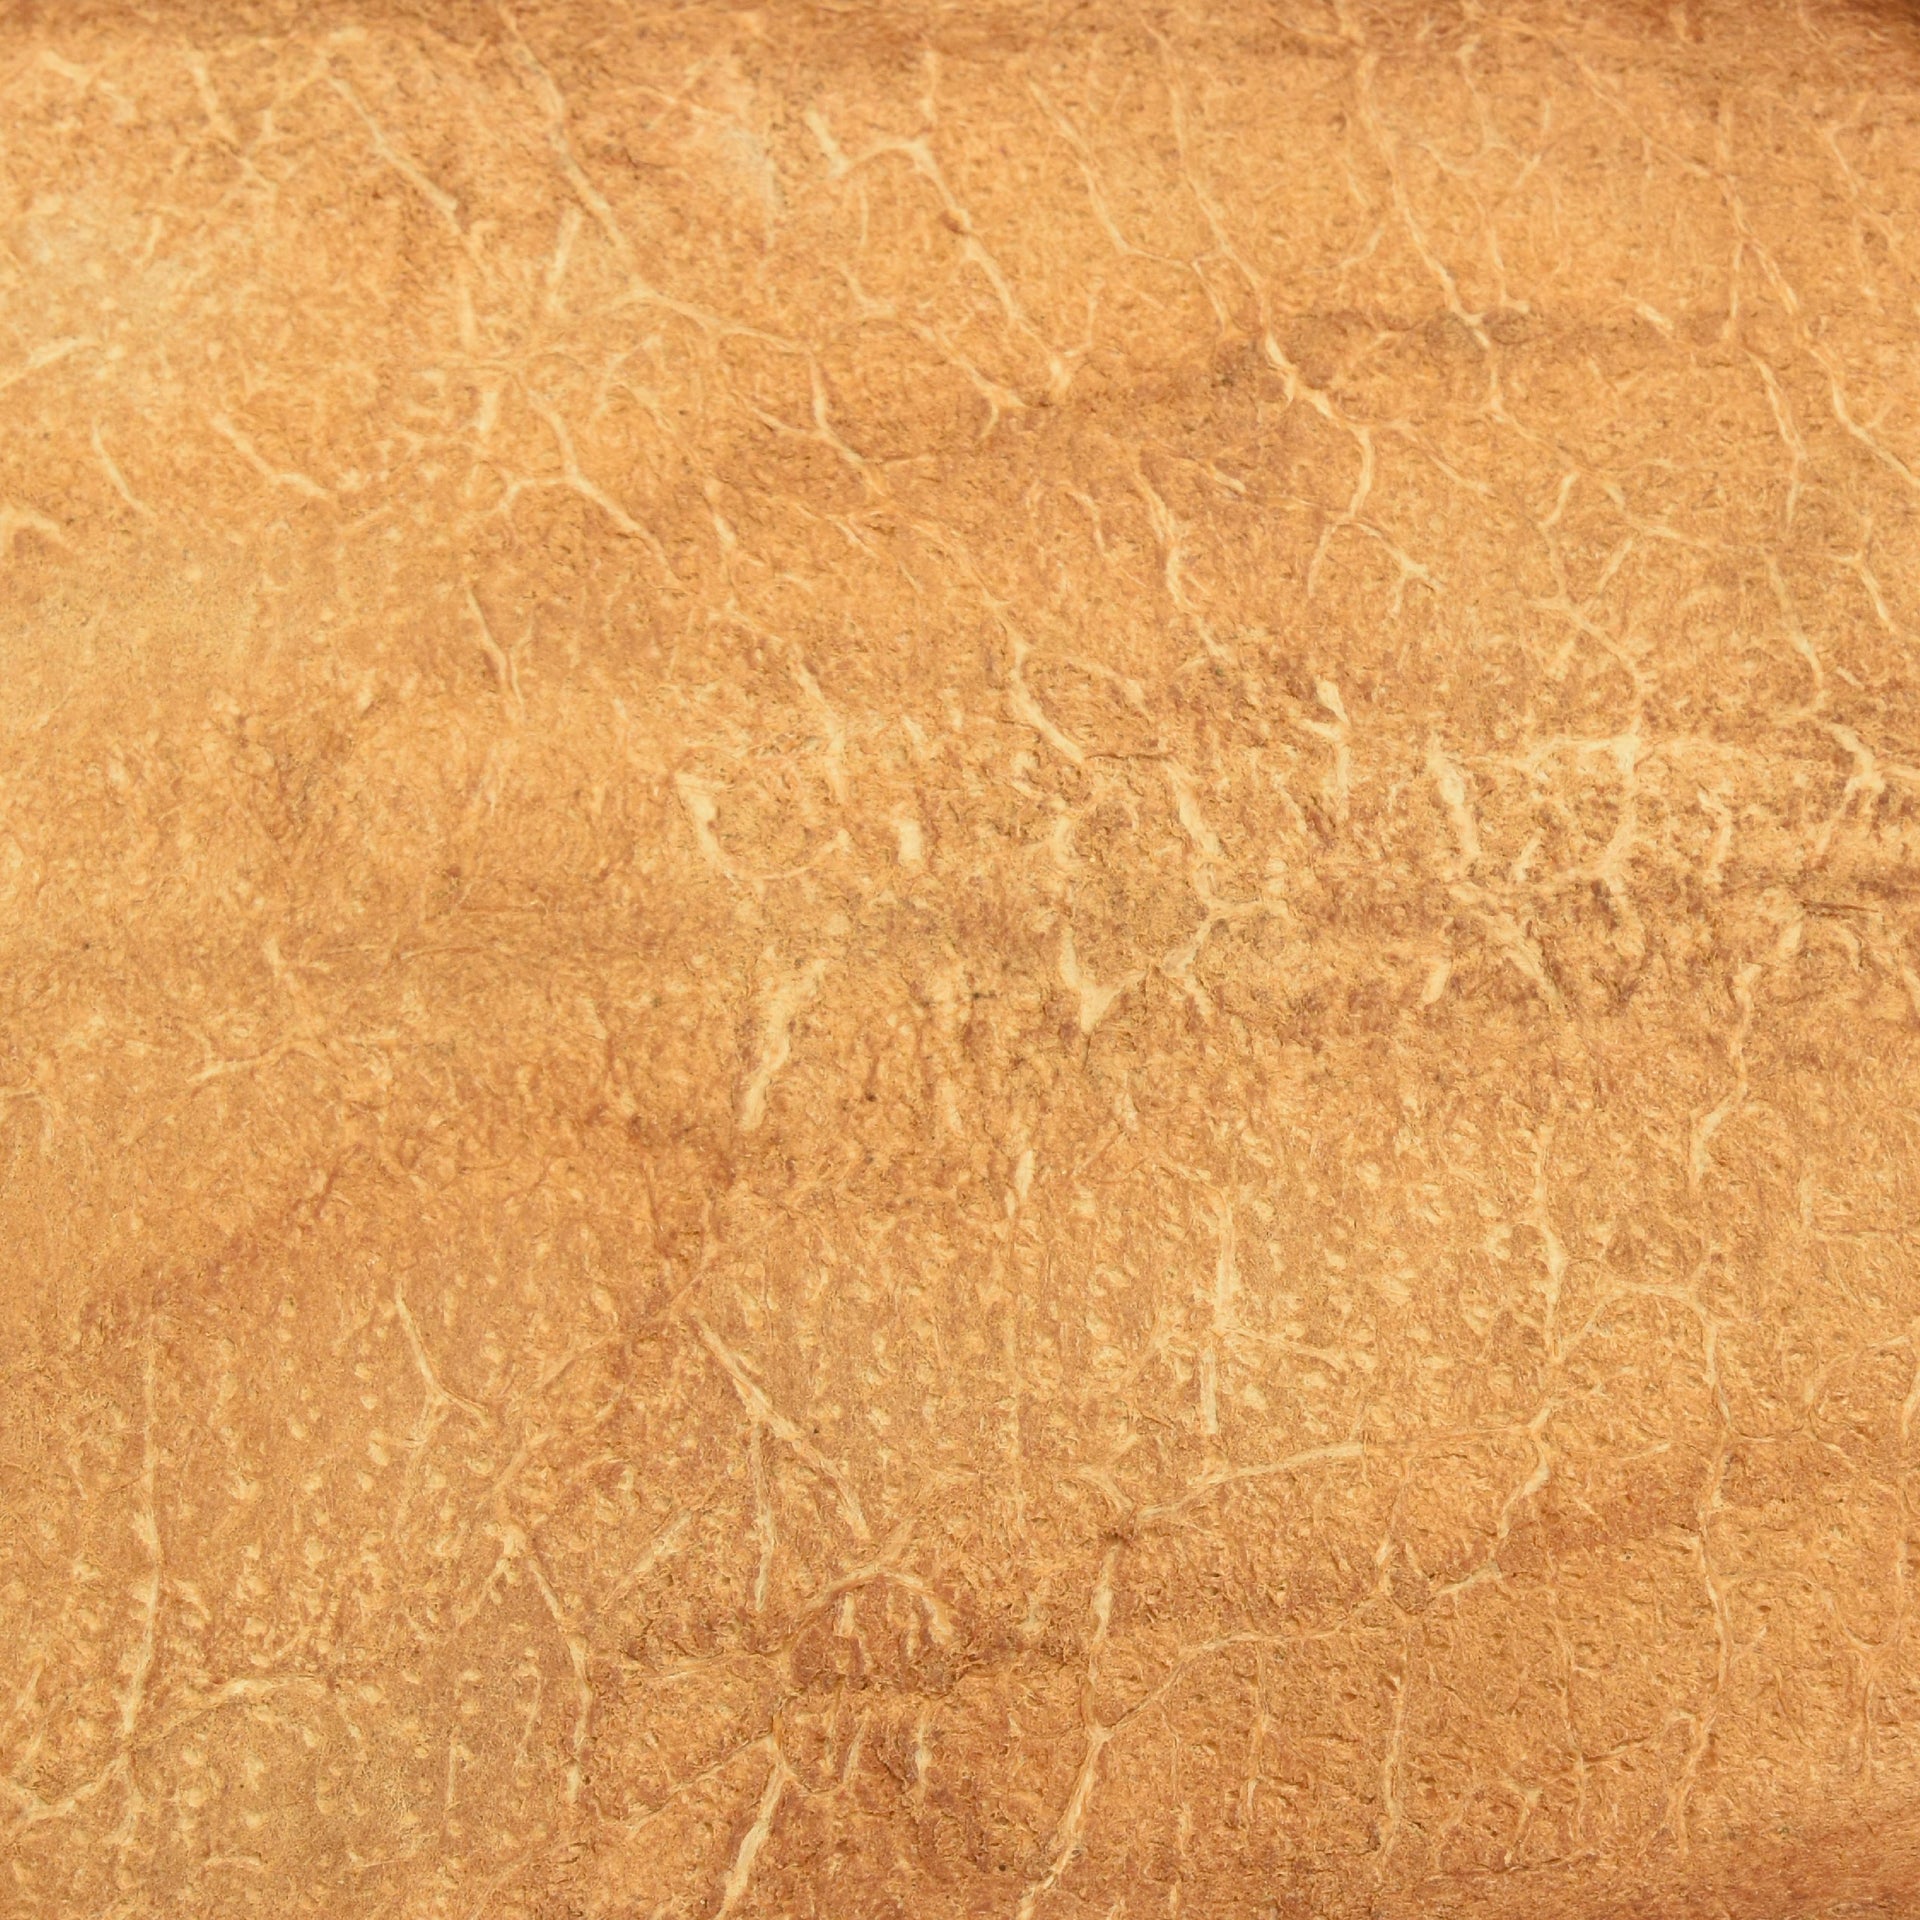 Veg Tan Beaver Tails,  | The Leather Guy